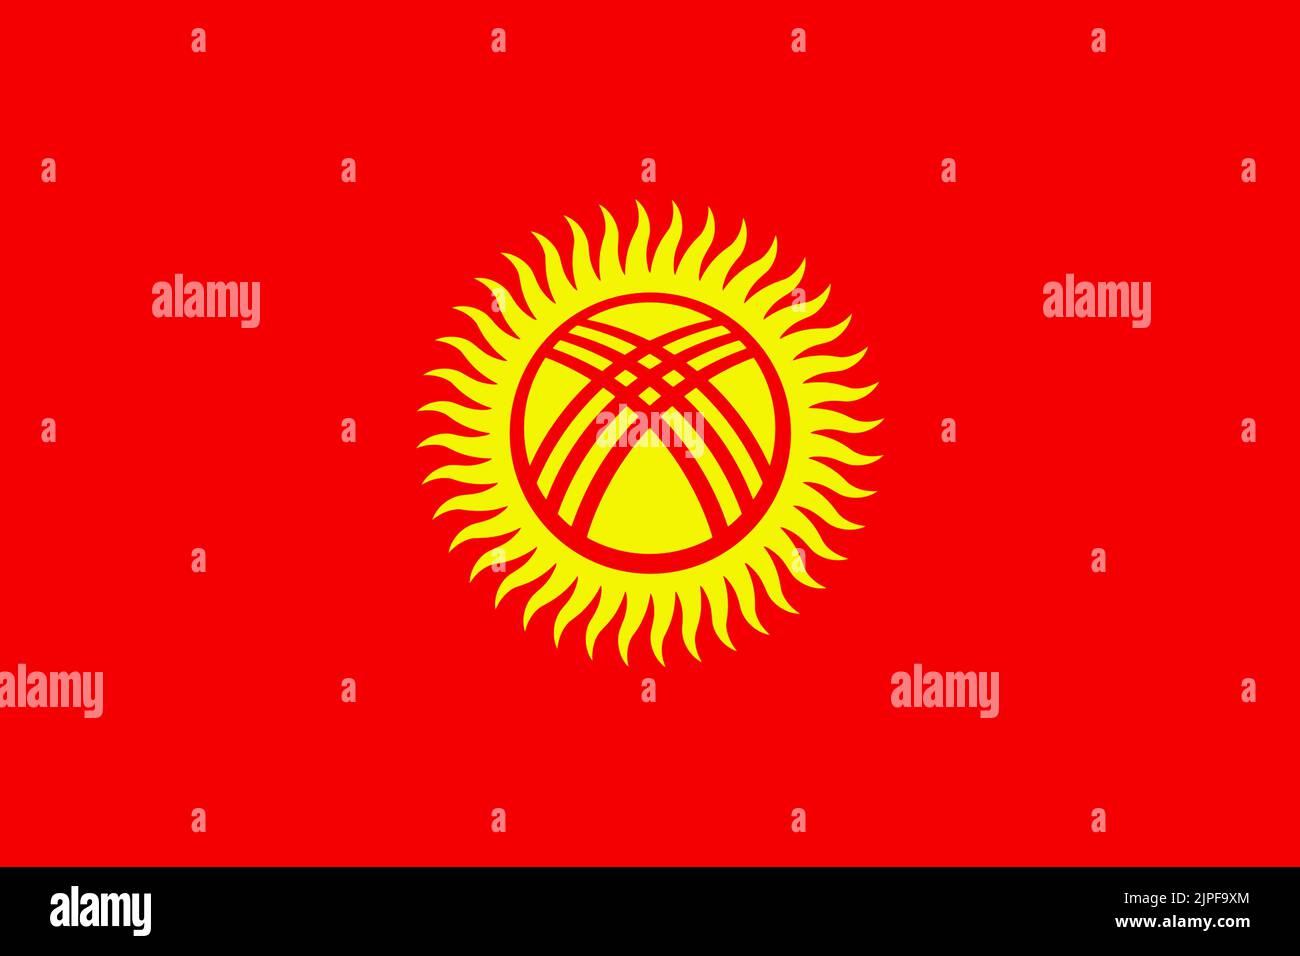 Kyrgystan flag background illustration red yellow sun tunduk Stock Photo